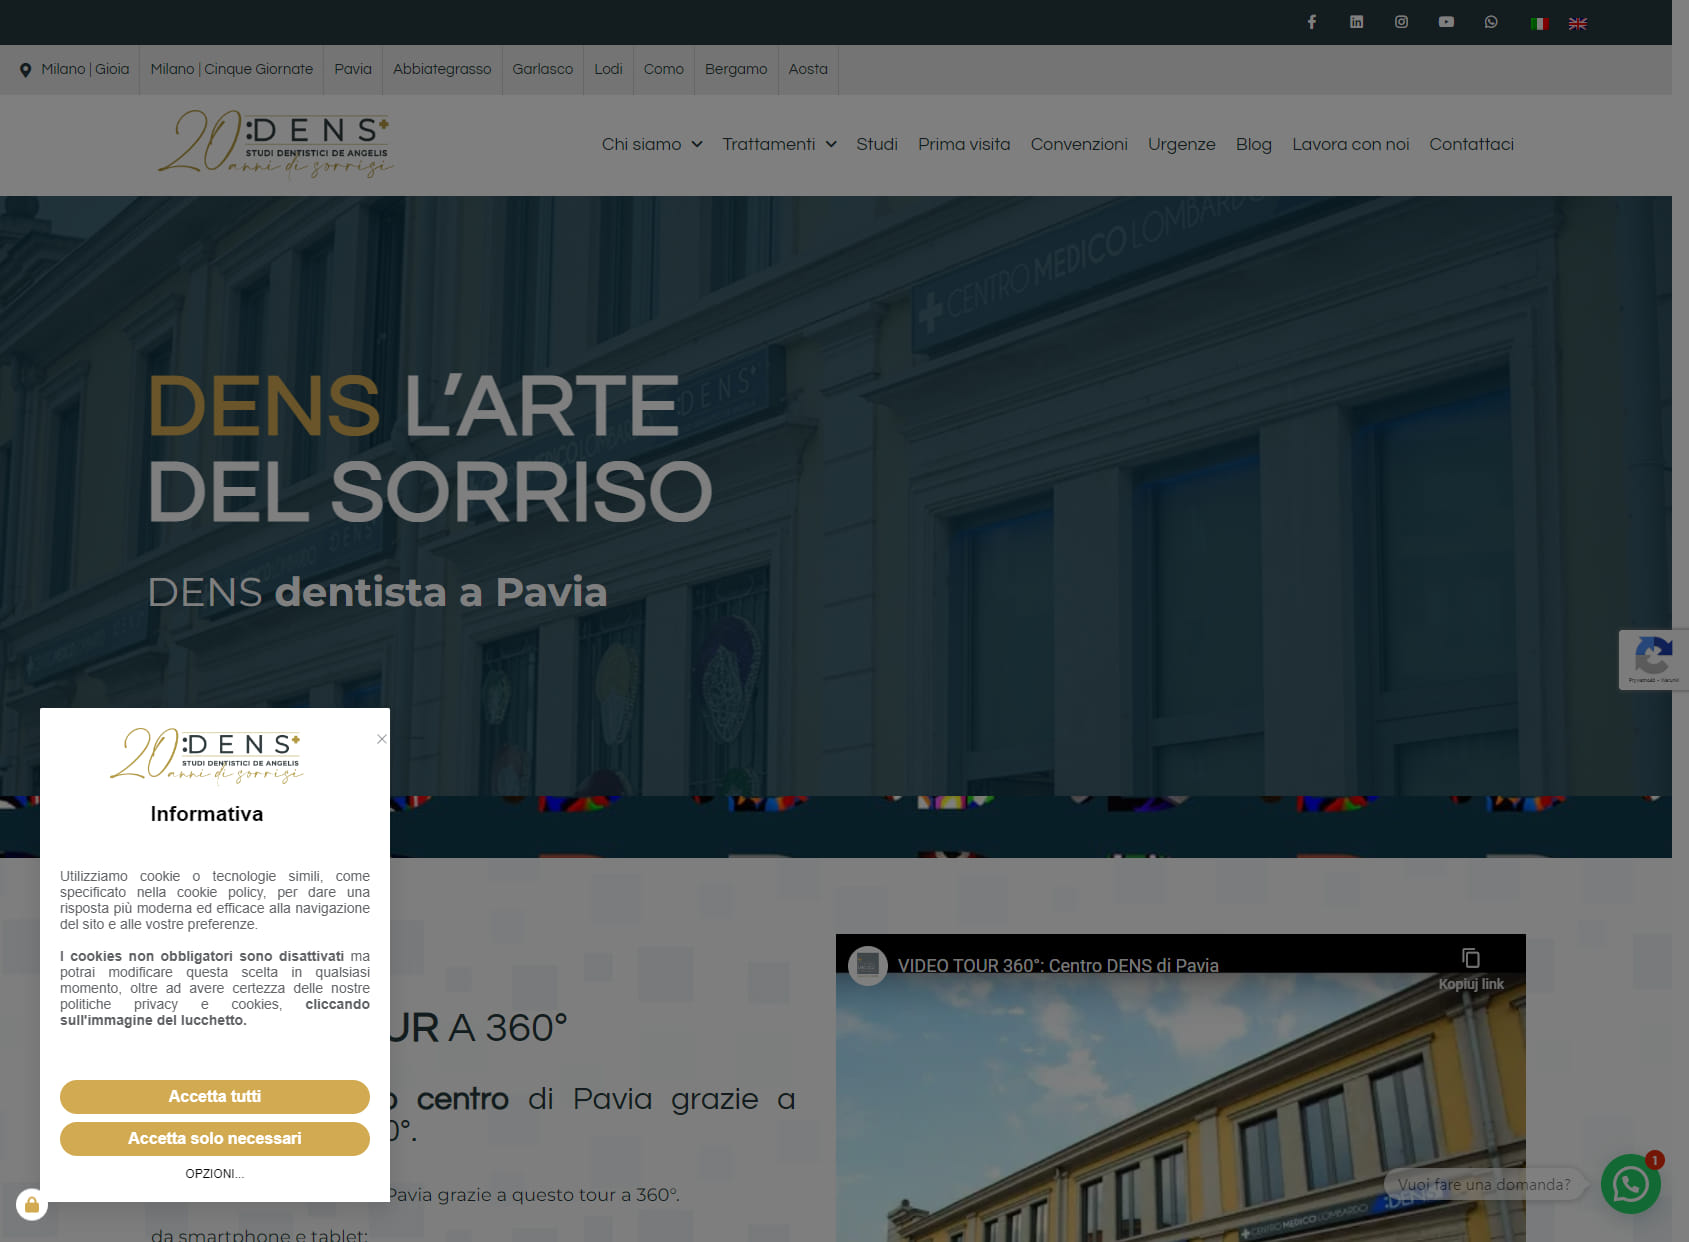 DENS Pavia | Studio Dentistico Pavia - Impianti dentali - Estetica dentale